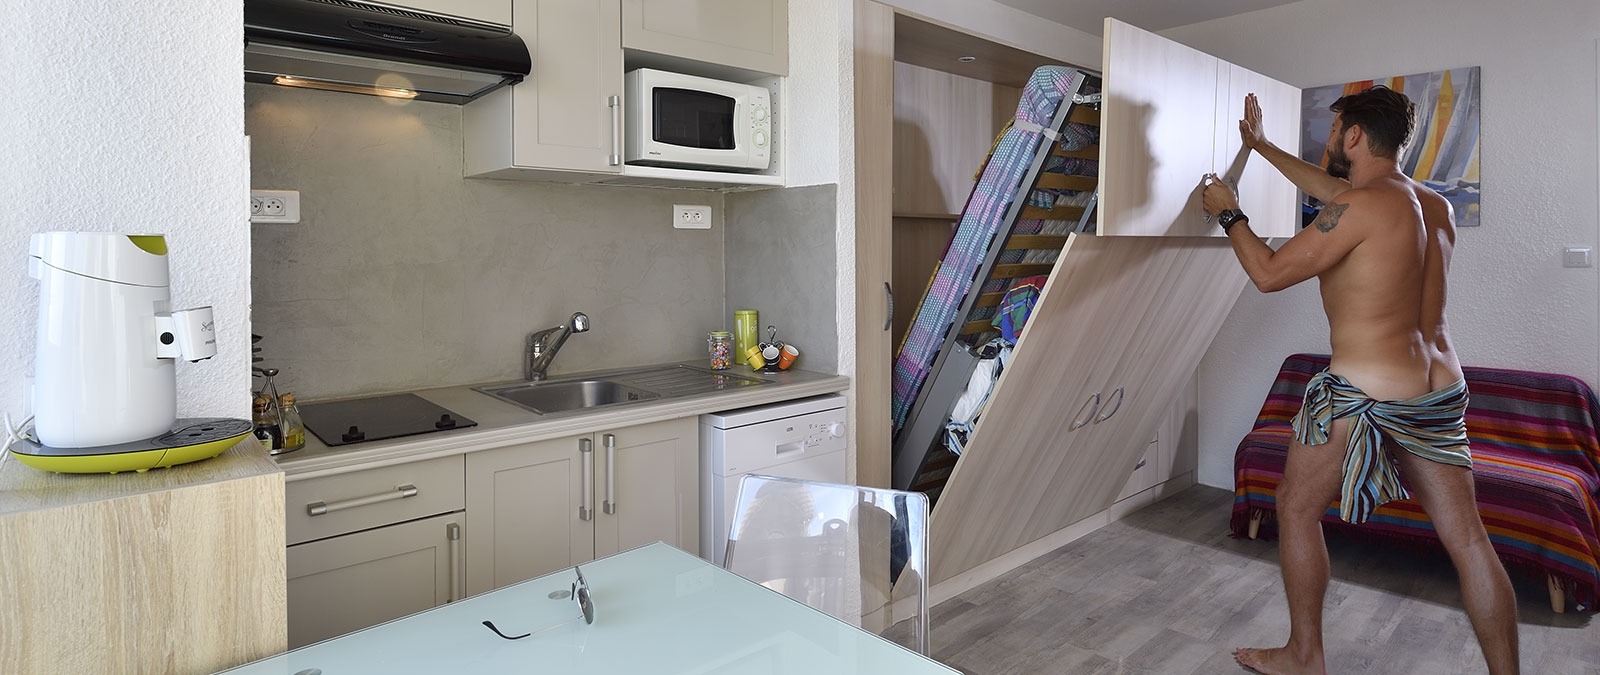 Equipped kitchen Liouquet studio flat libertine rental